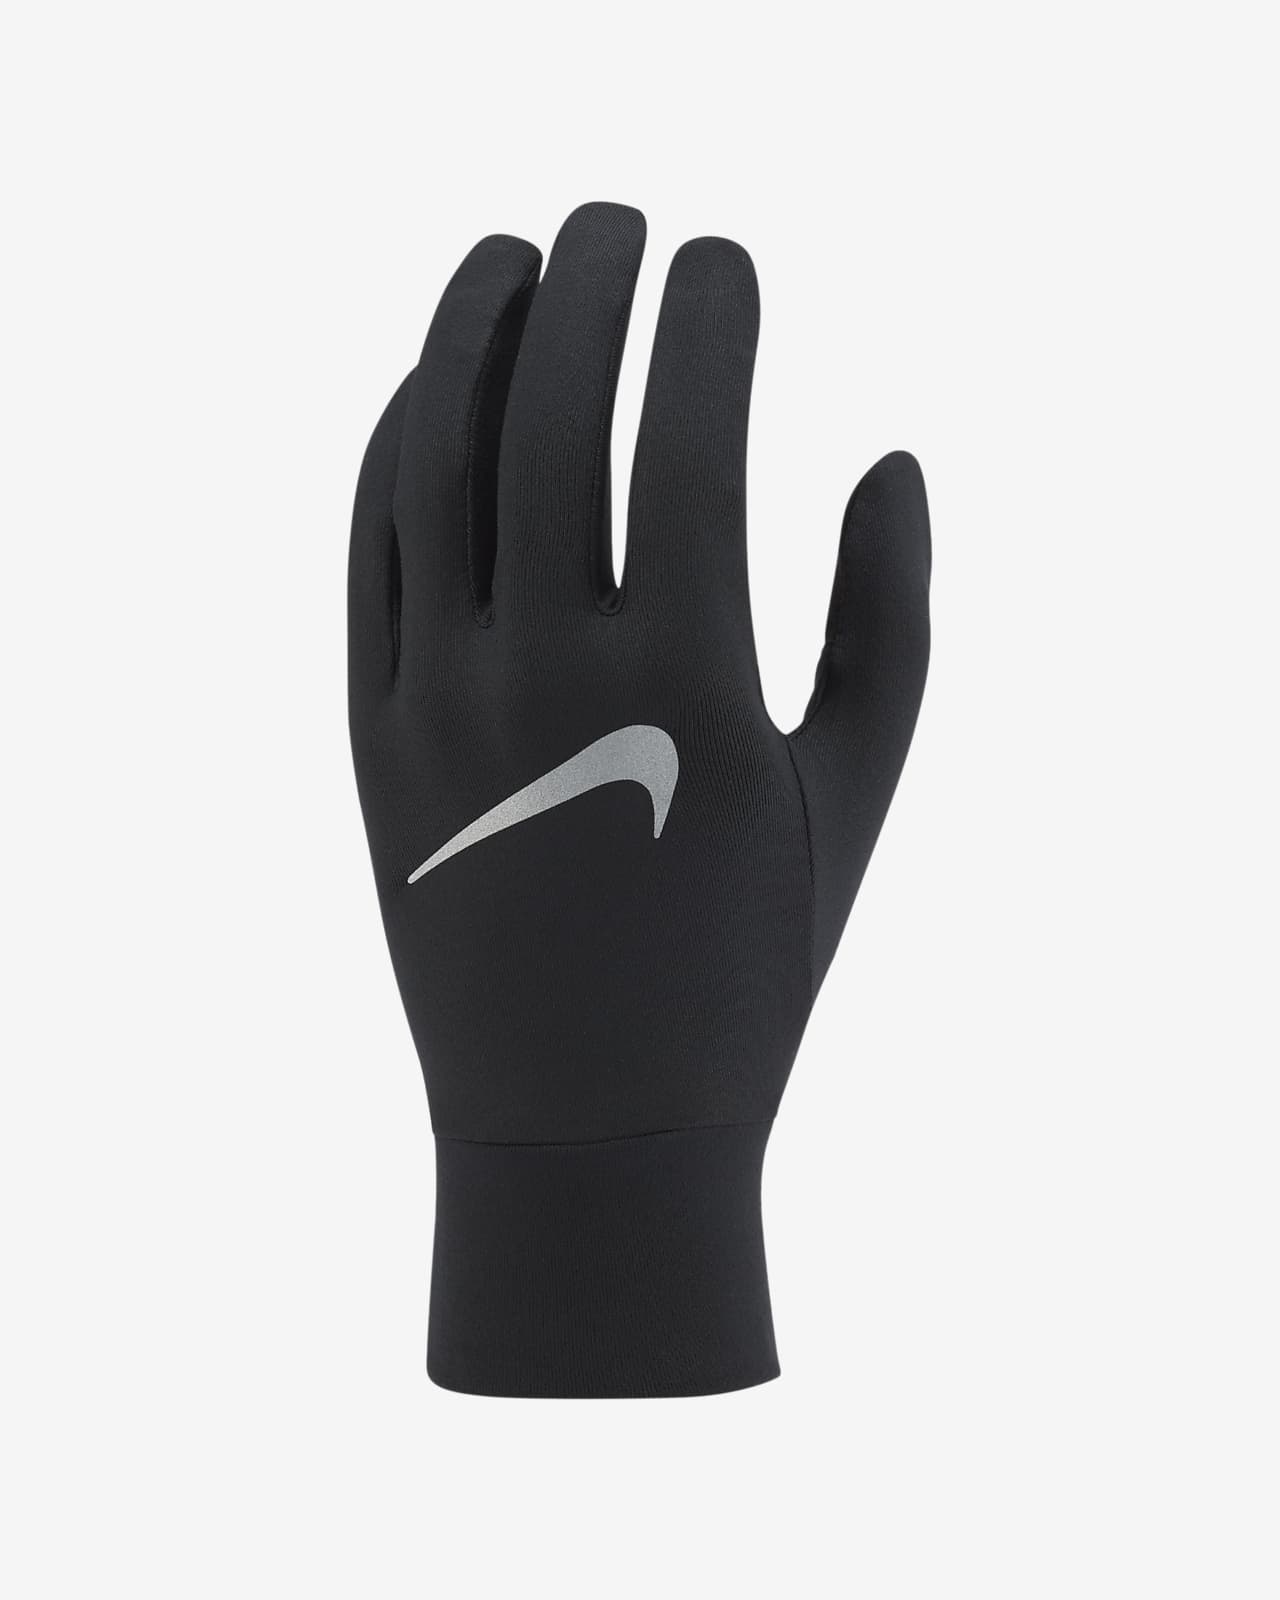 nike running gloves size chart